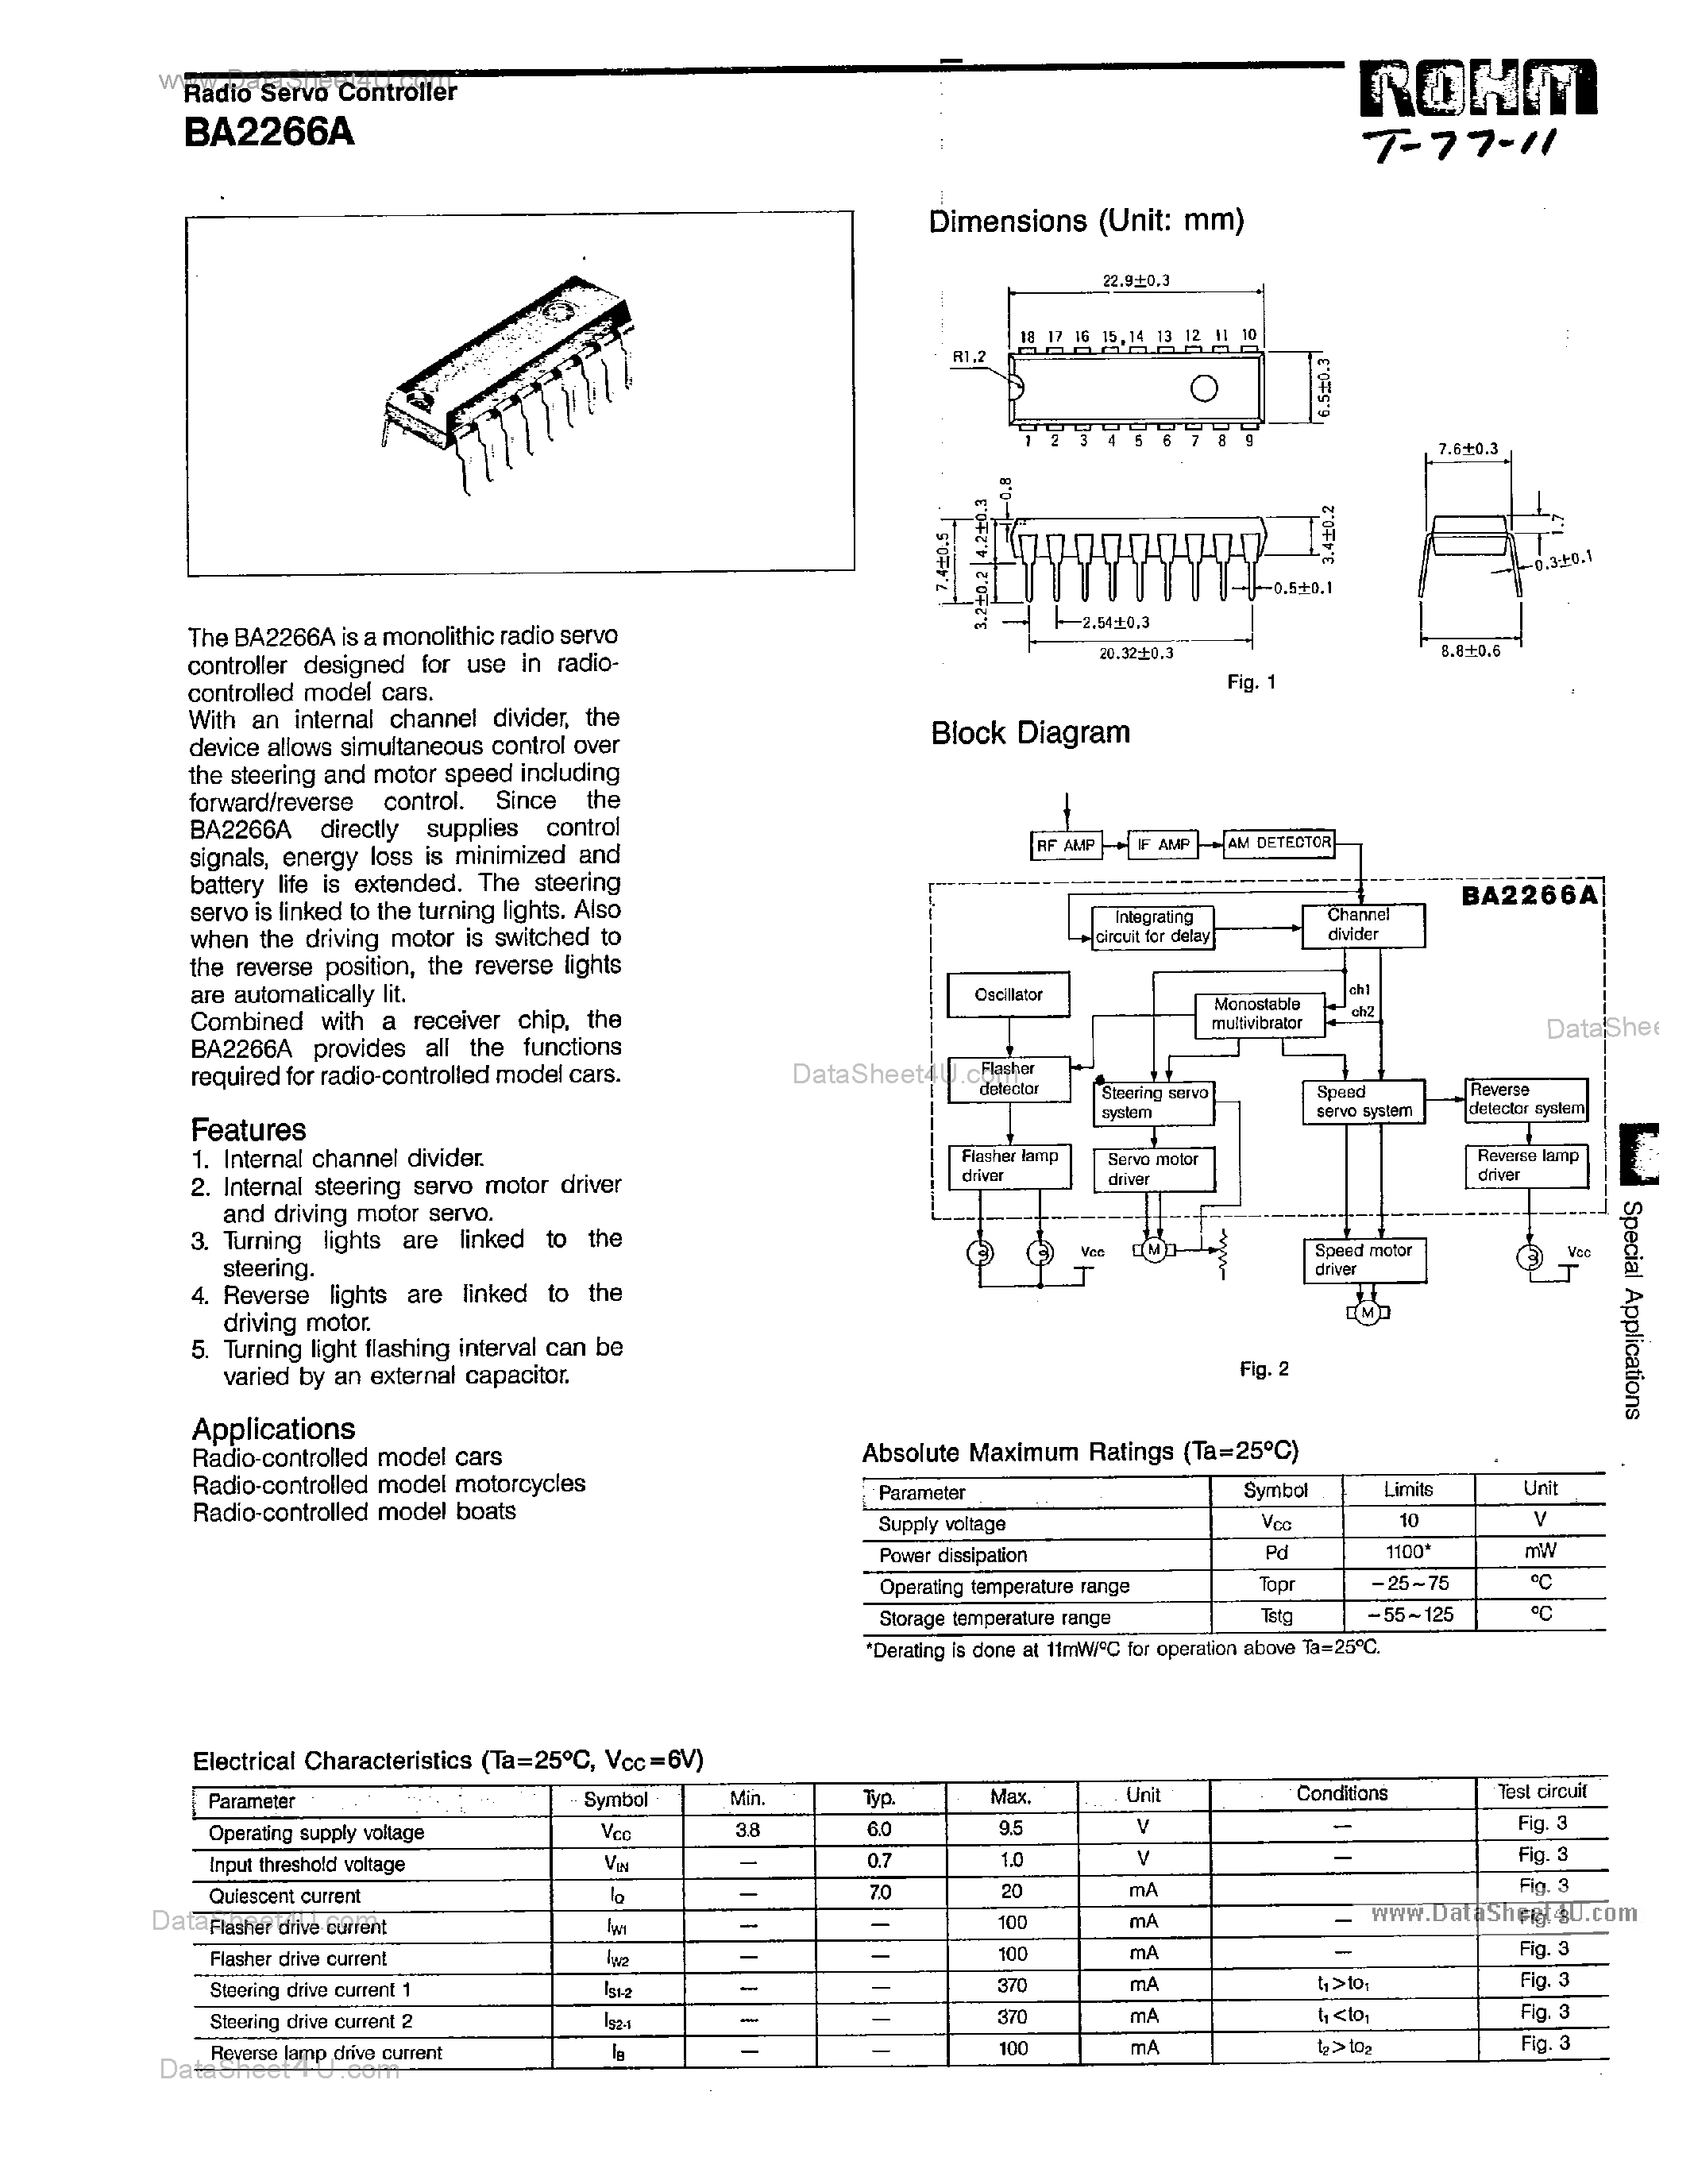 Datasheet BA2266A - Radio Servo Controller page 1